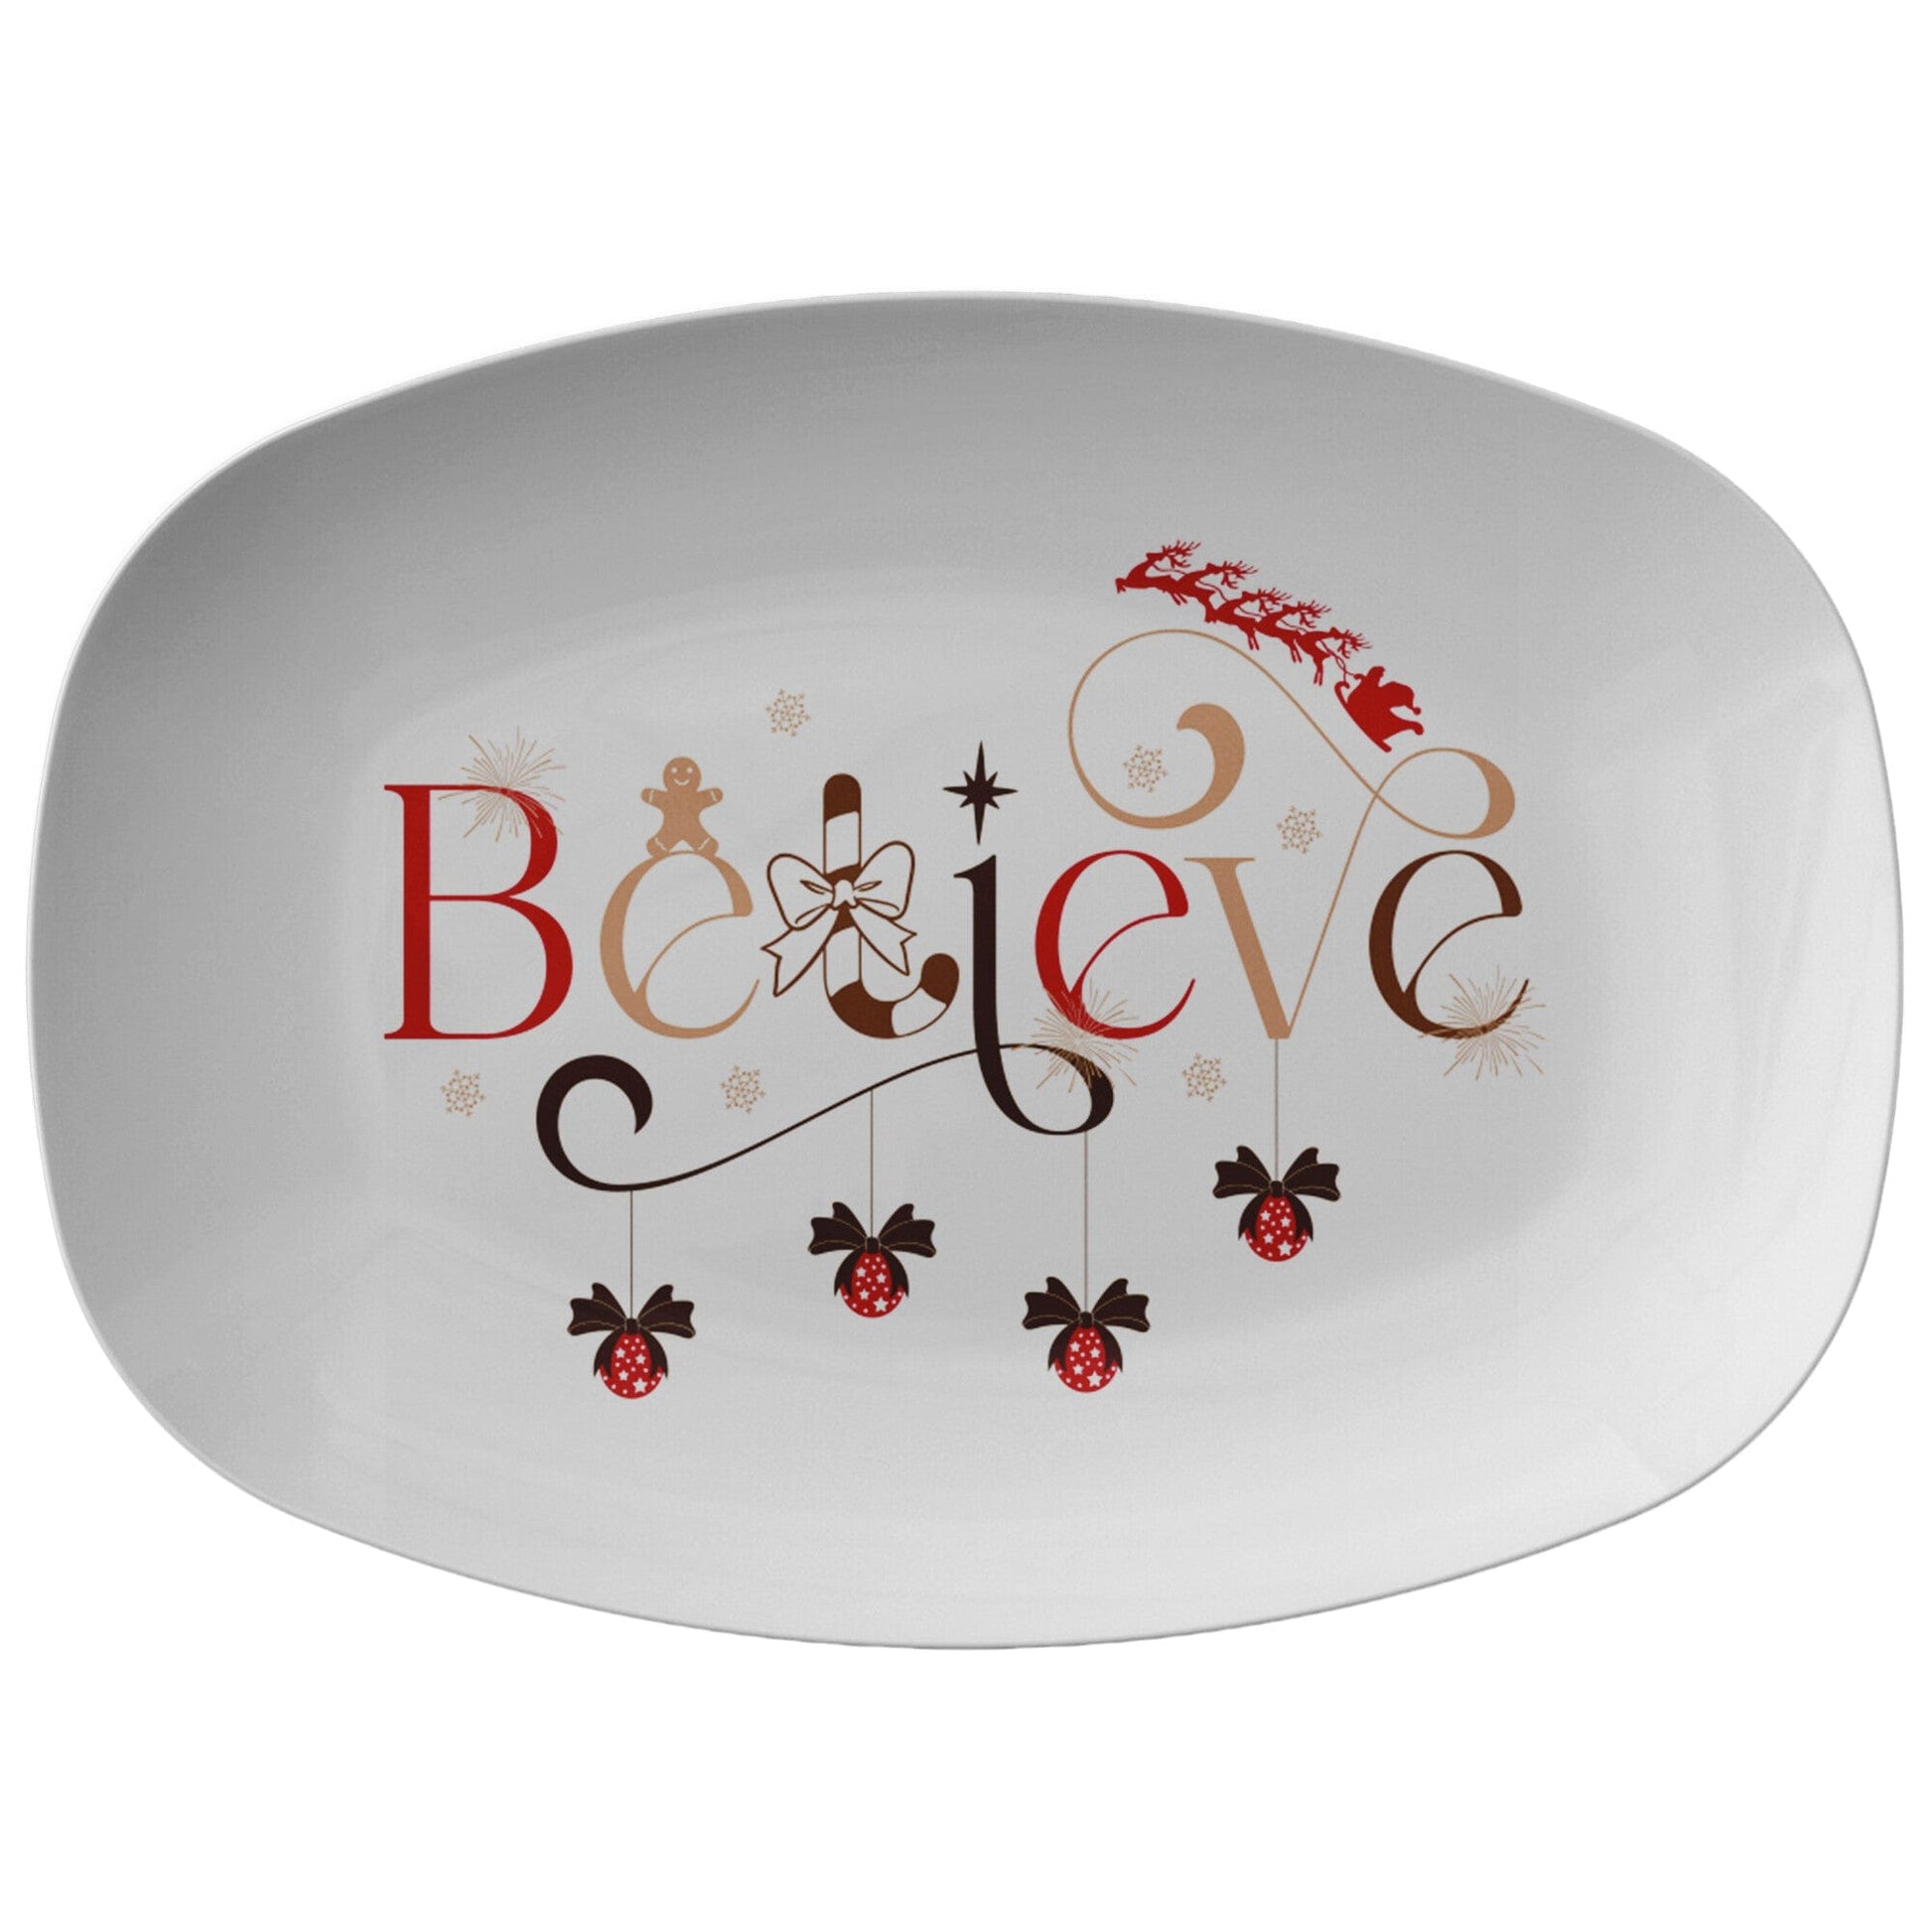 Kate McEnroe New York Believe Christmas Serving Platter Serving Platters 9727